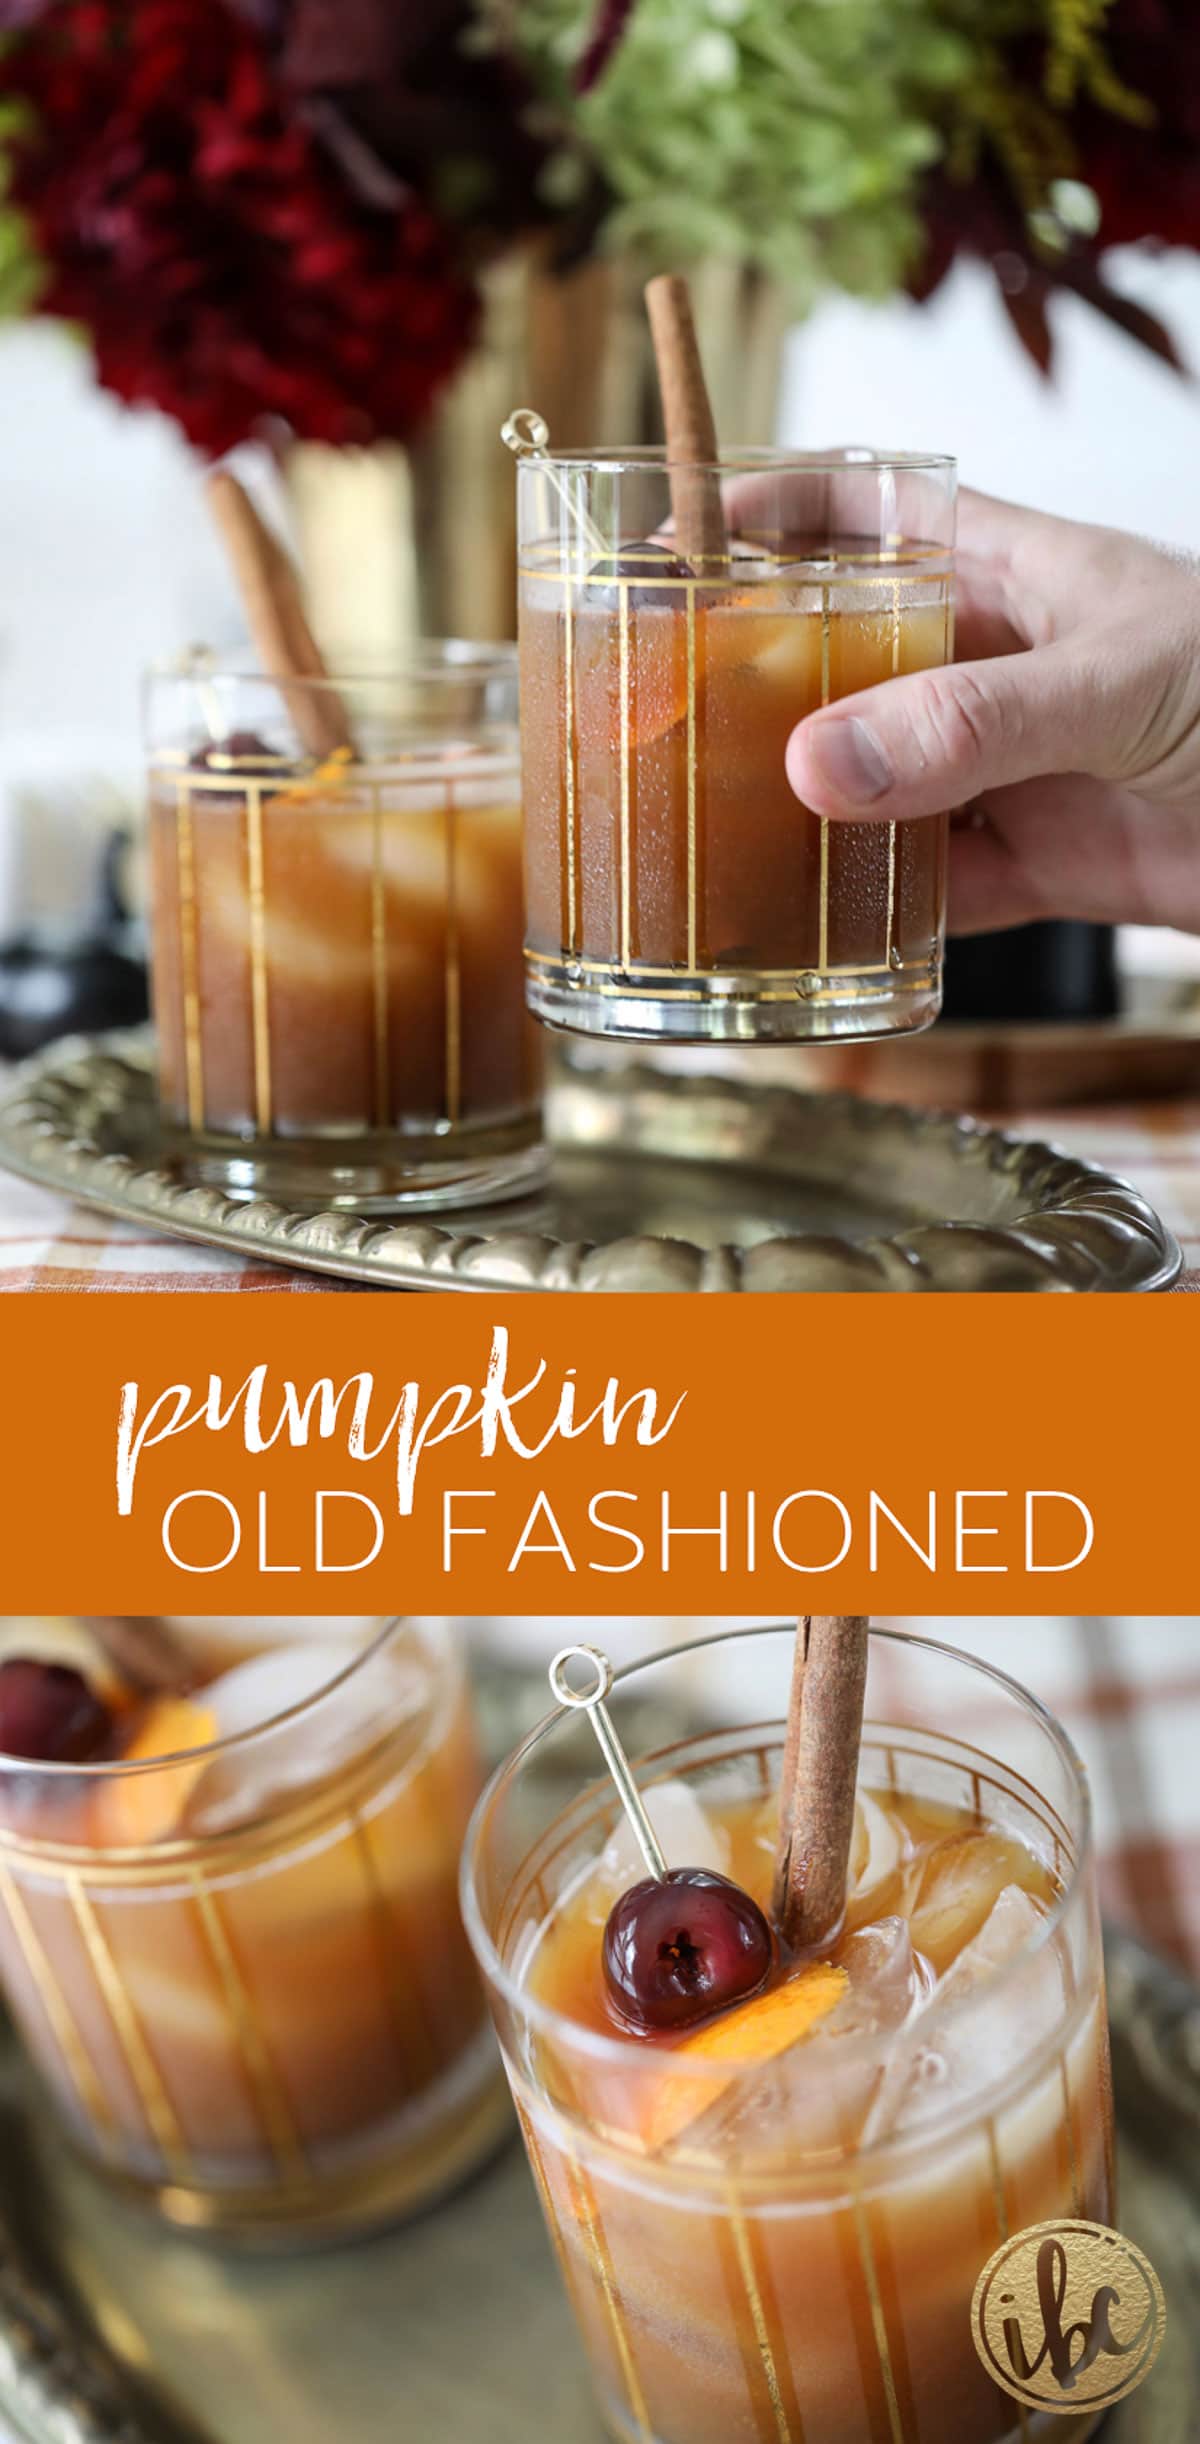 Pumpkin Old Fashioned Fall Cocktail Recipe #pumpkin #oldfashioned #cocktail #fall #recipe